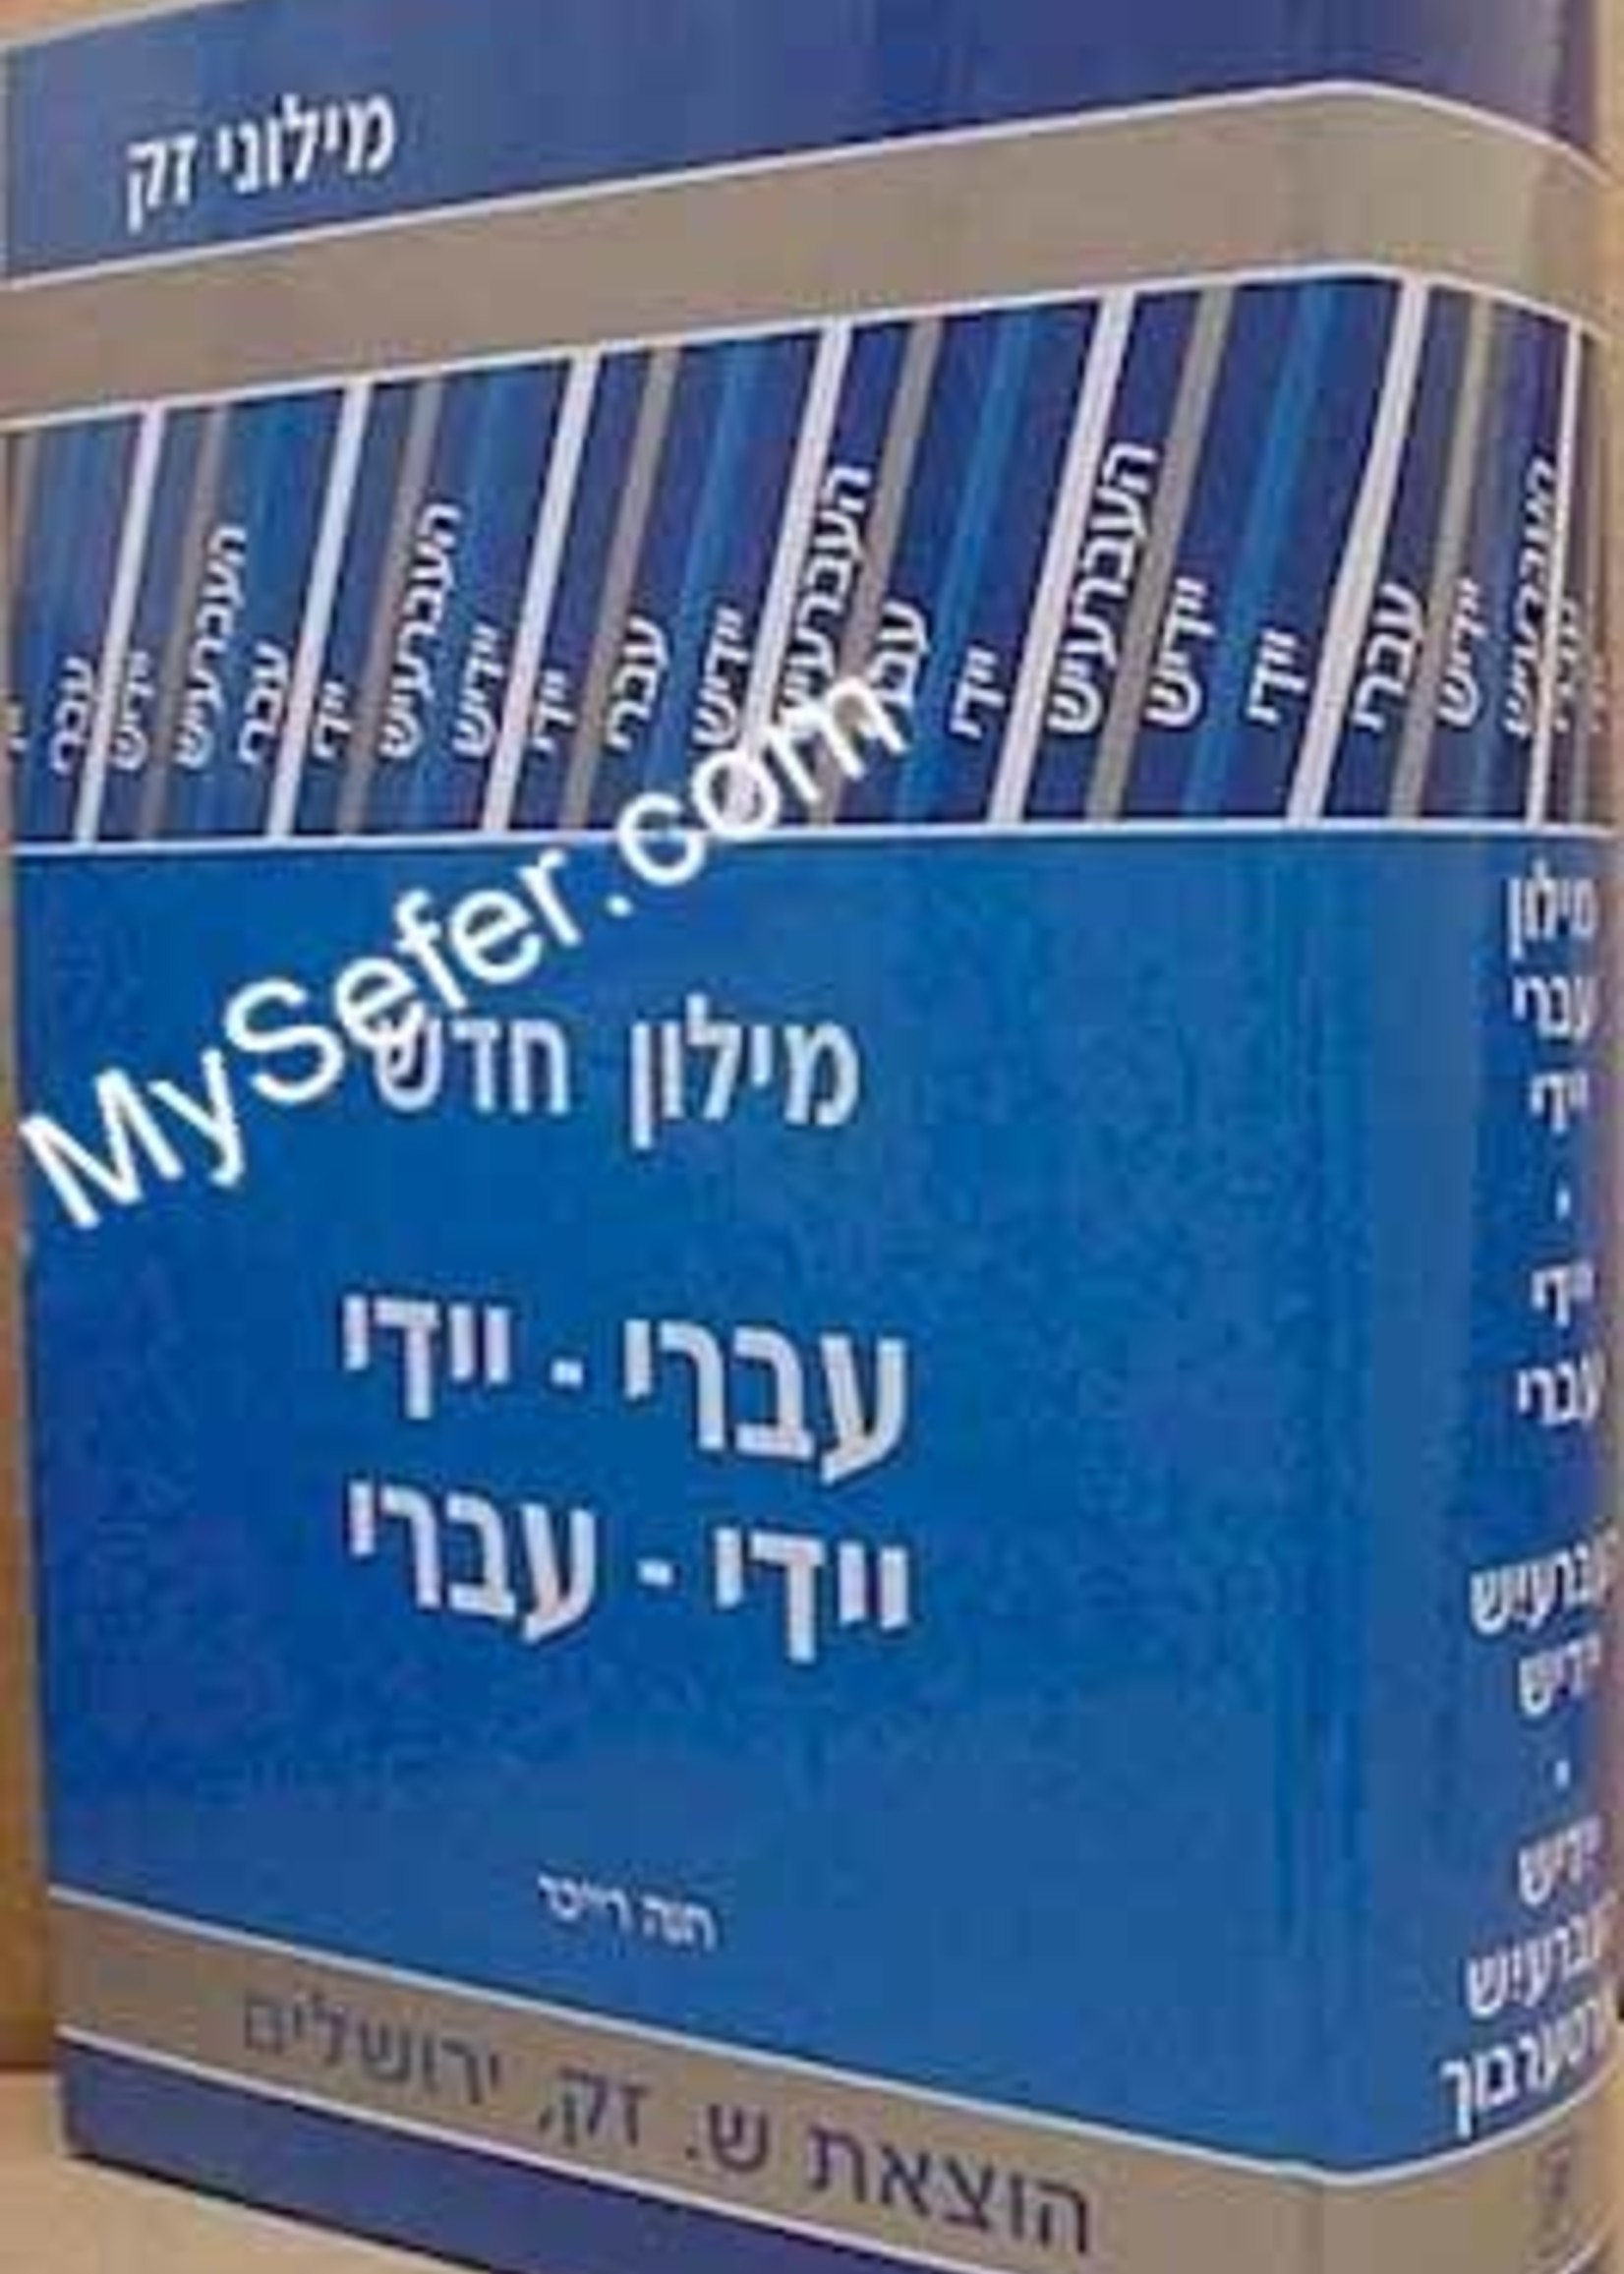 Chana Reicher Hebrew - Yiddish / Yiddish - Hebrew Dictionary/  מלון חדש עברי - יידי / יידי - עברי